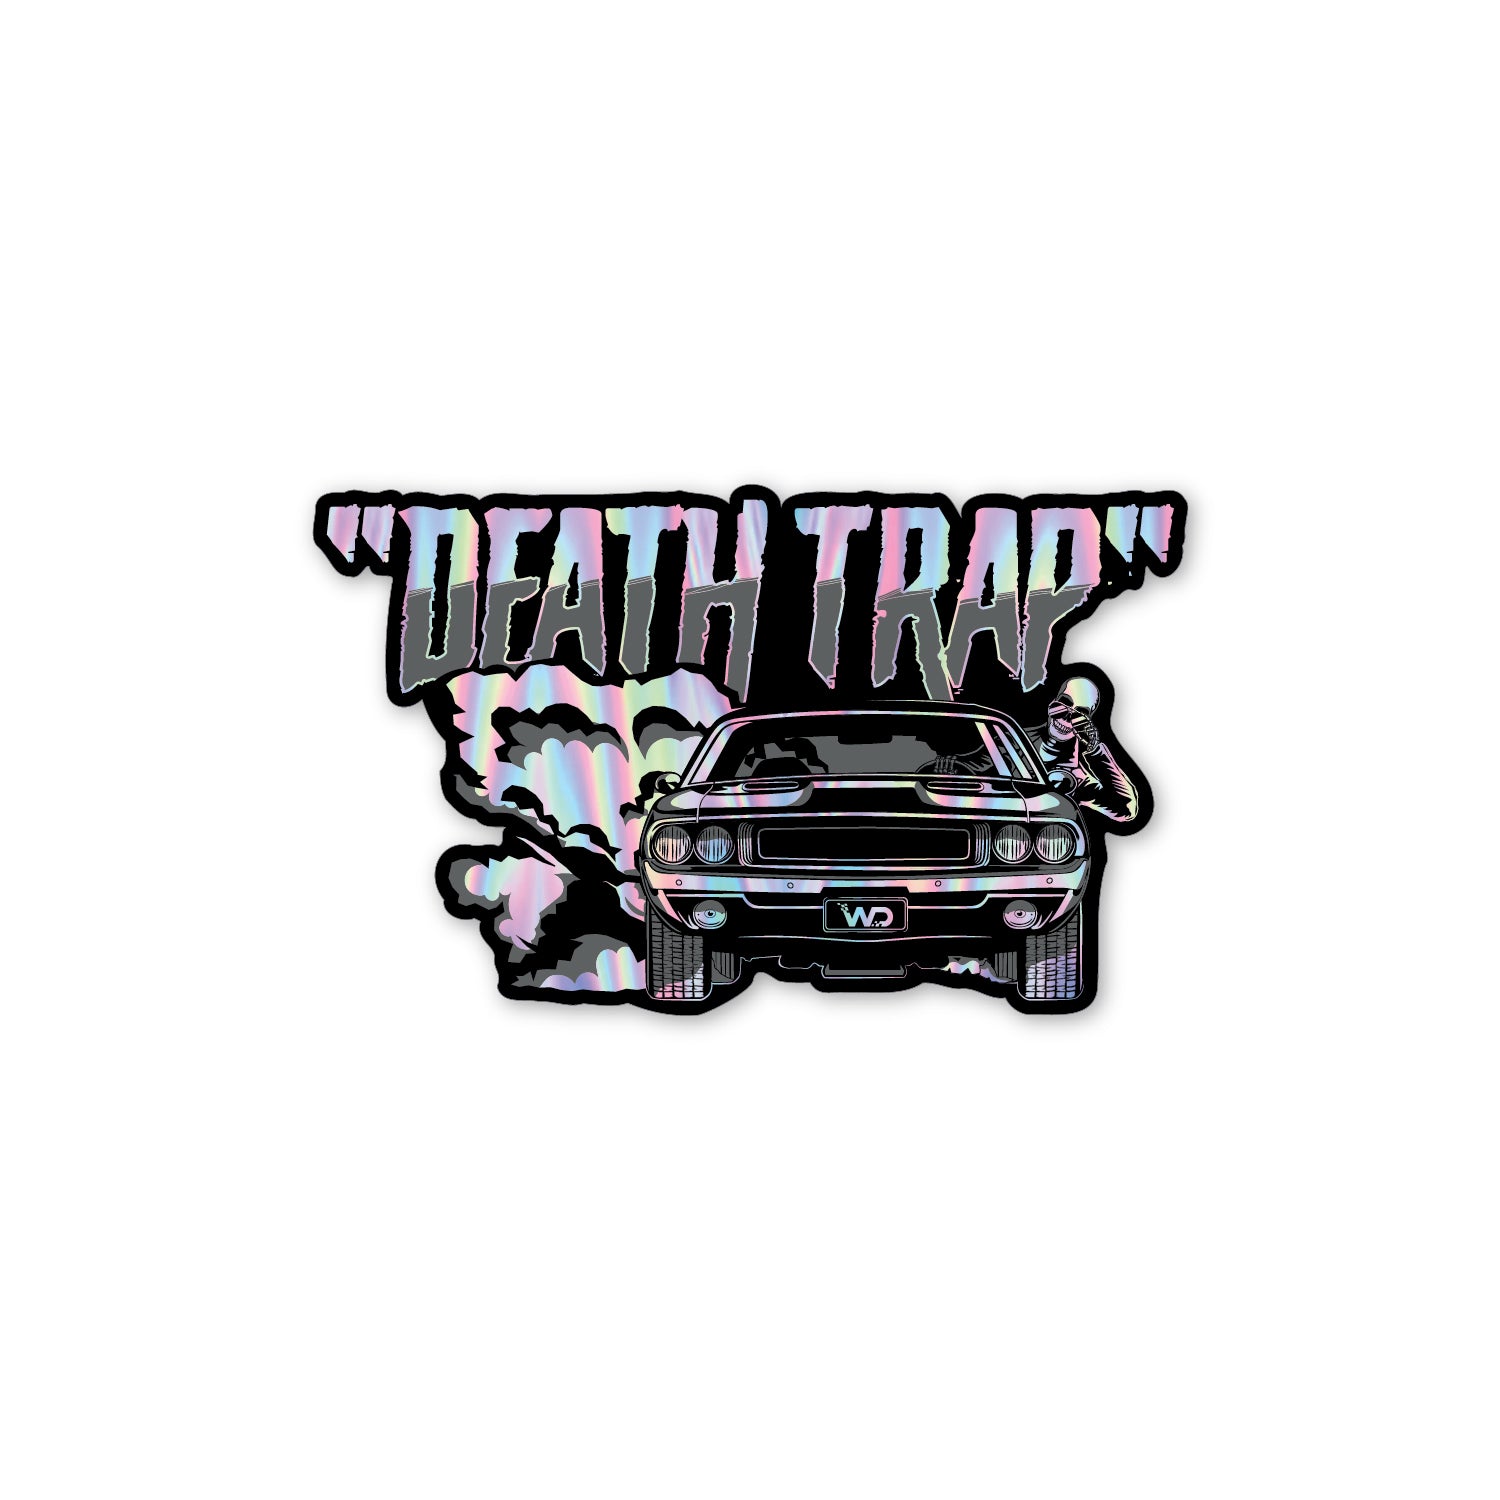 Sticker - Black Death Trap